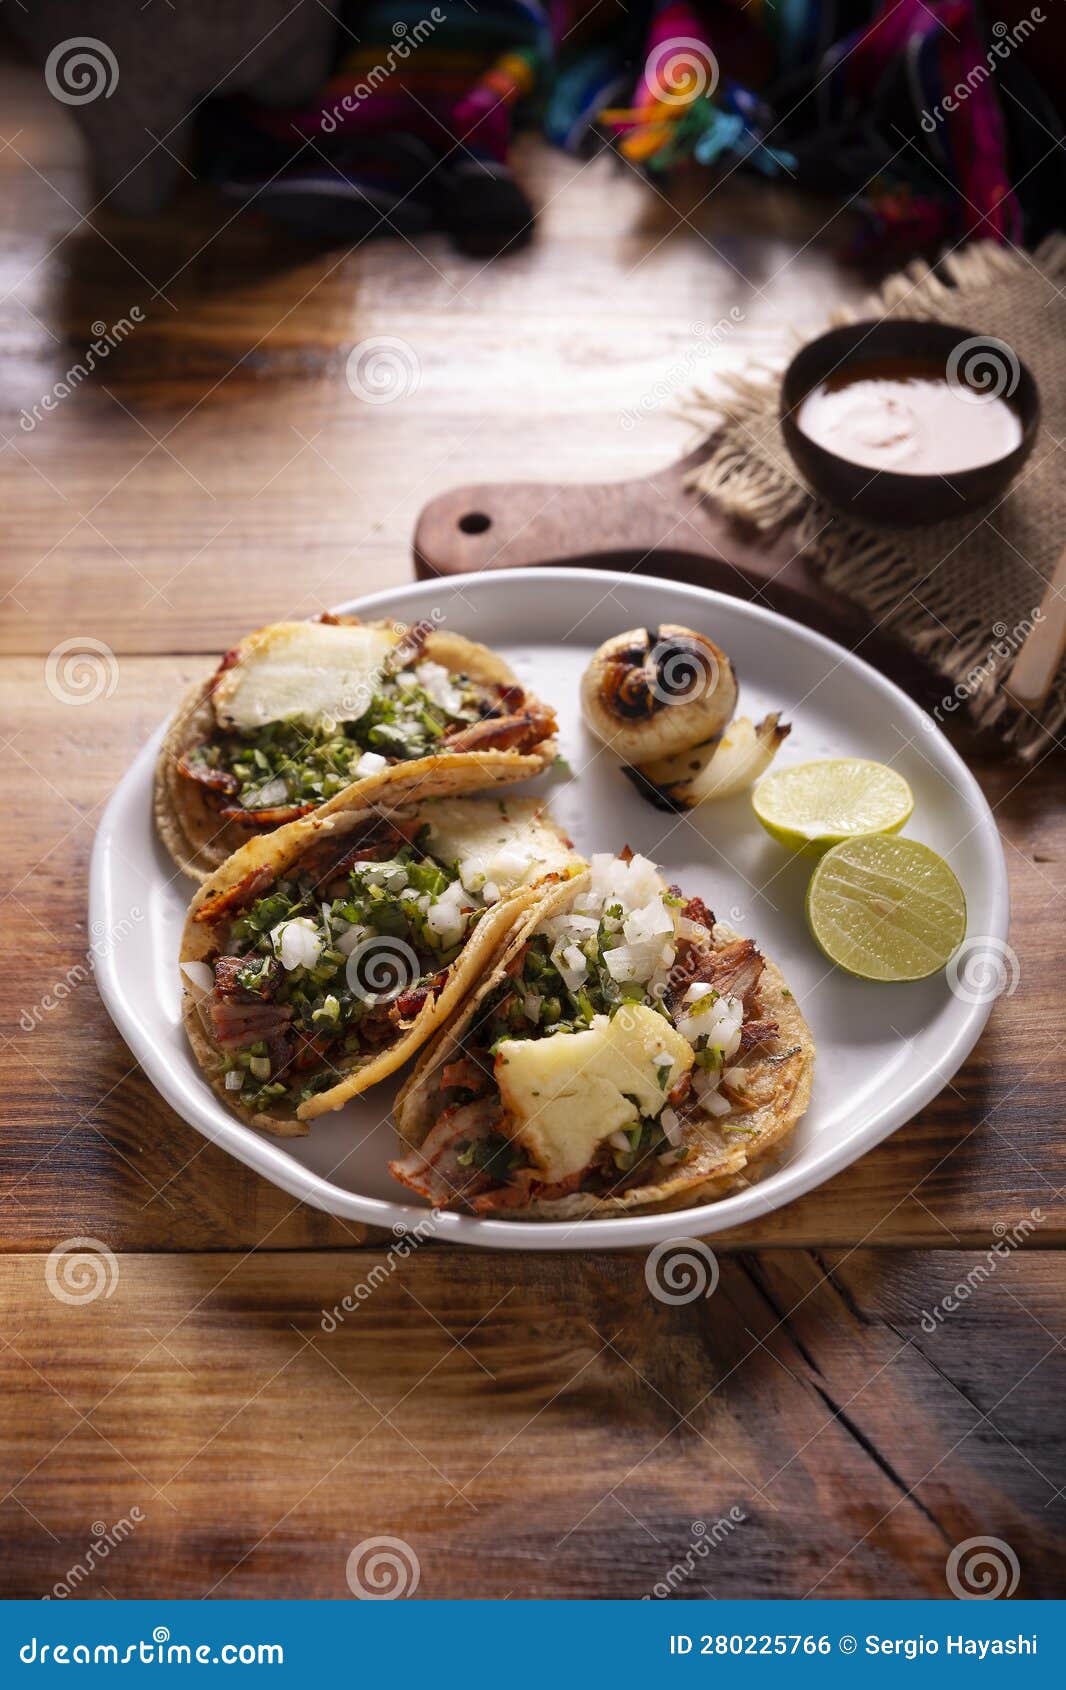 tacos al pastor mexican food